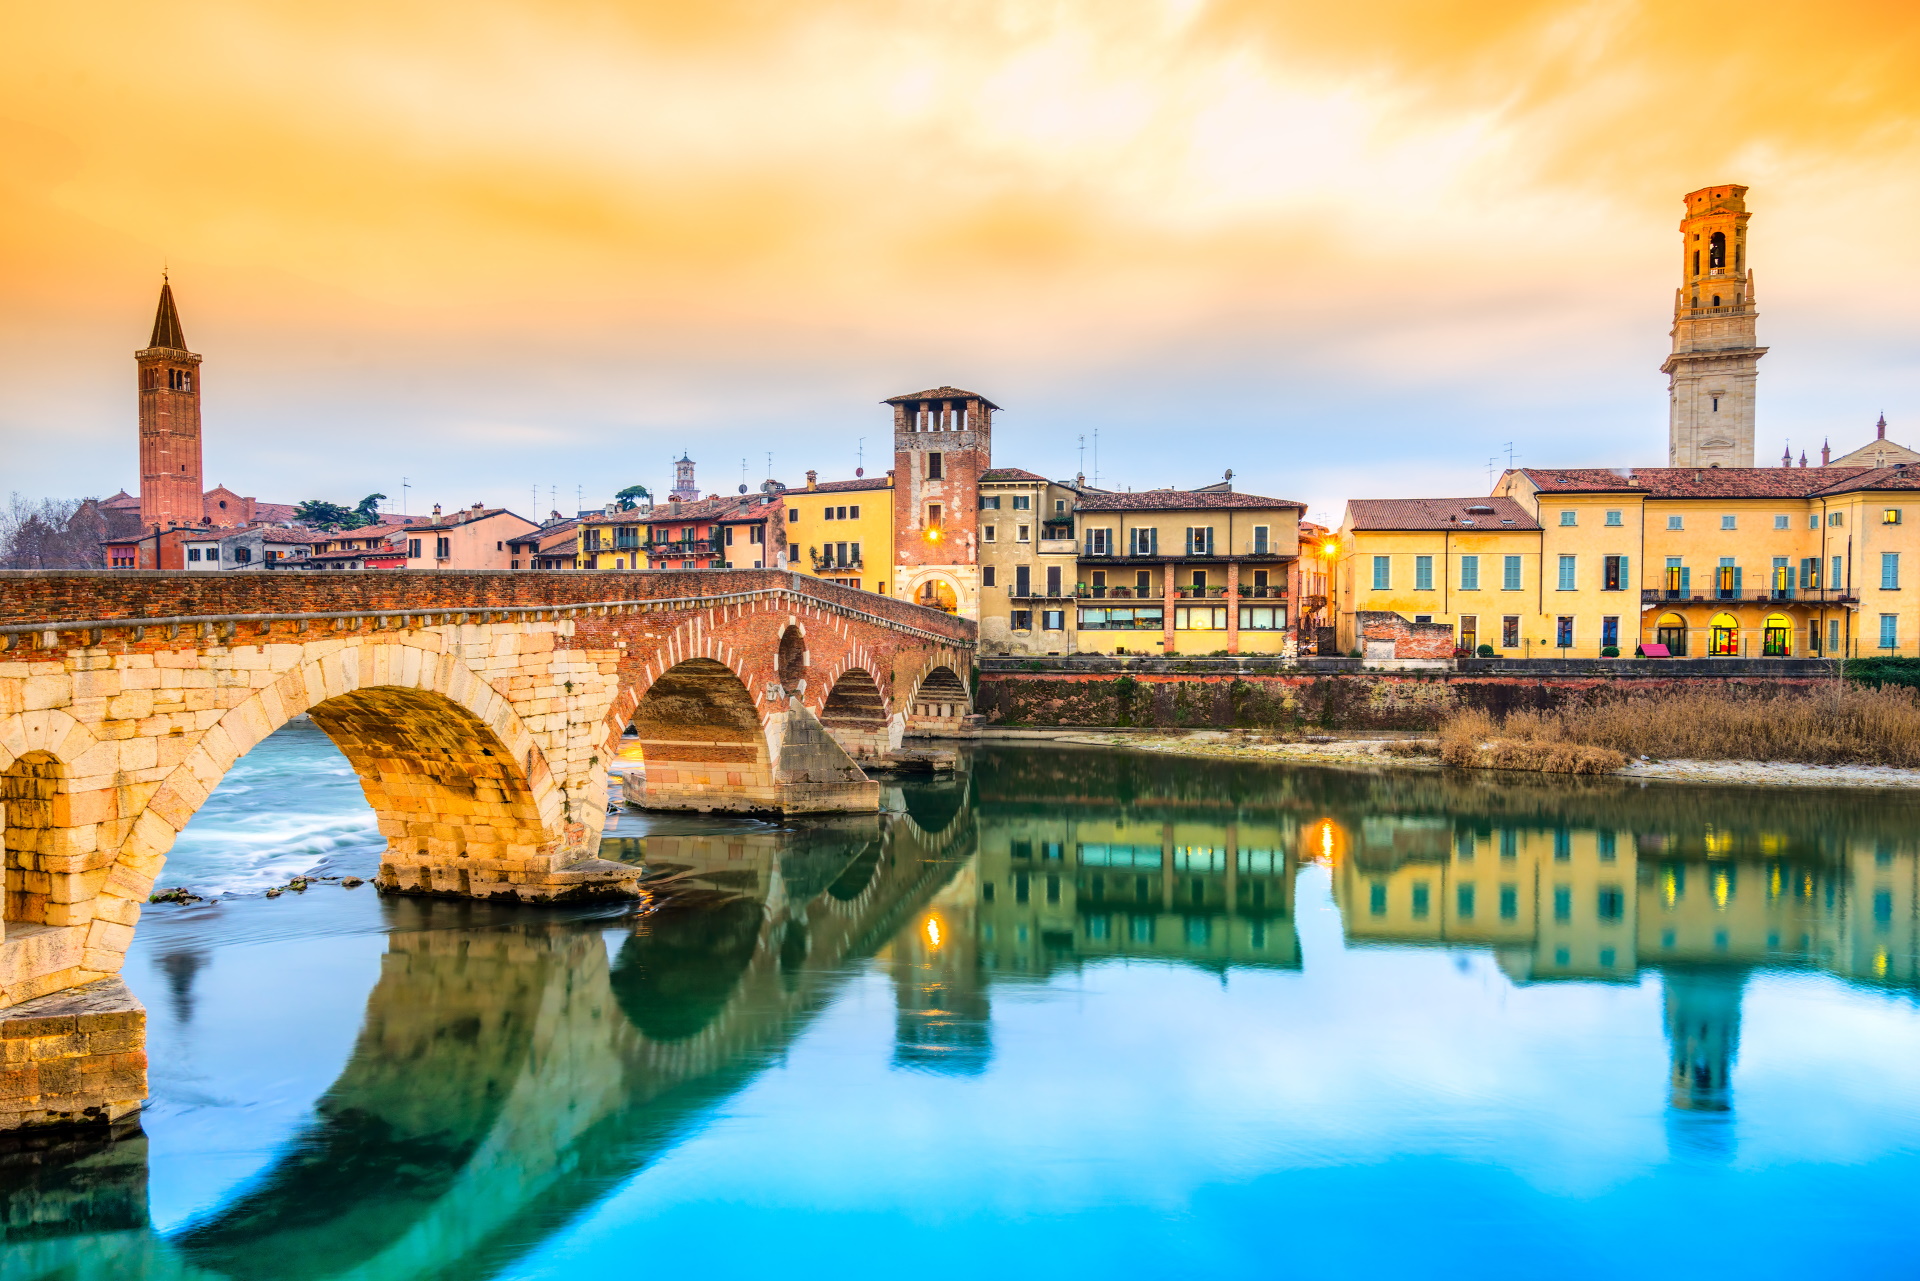 Ponte di Pietra in Verona